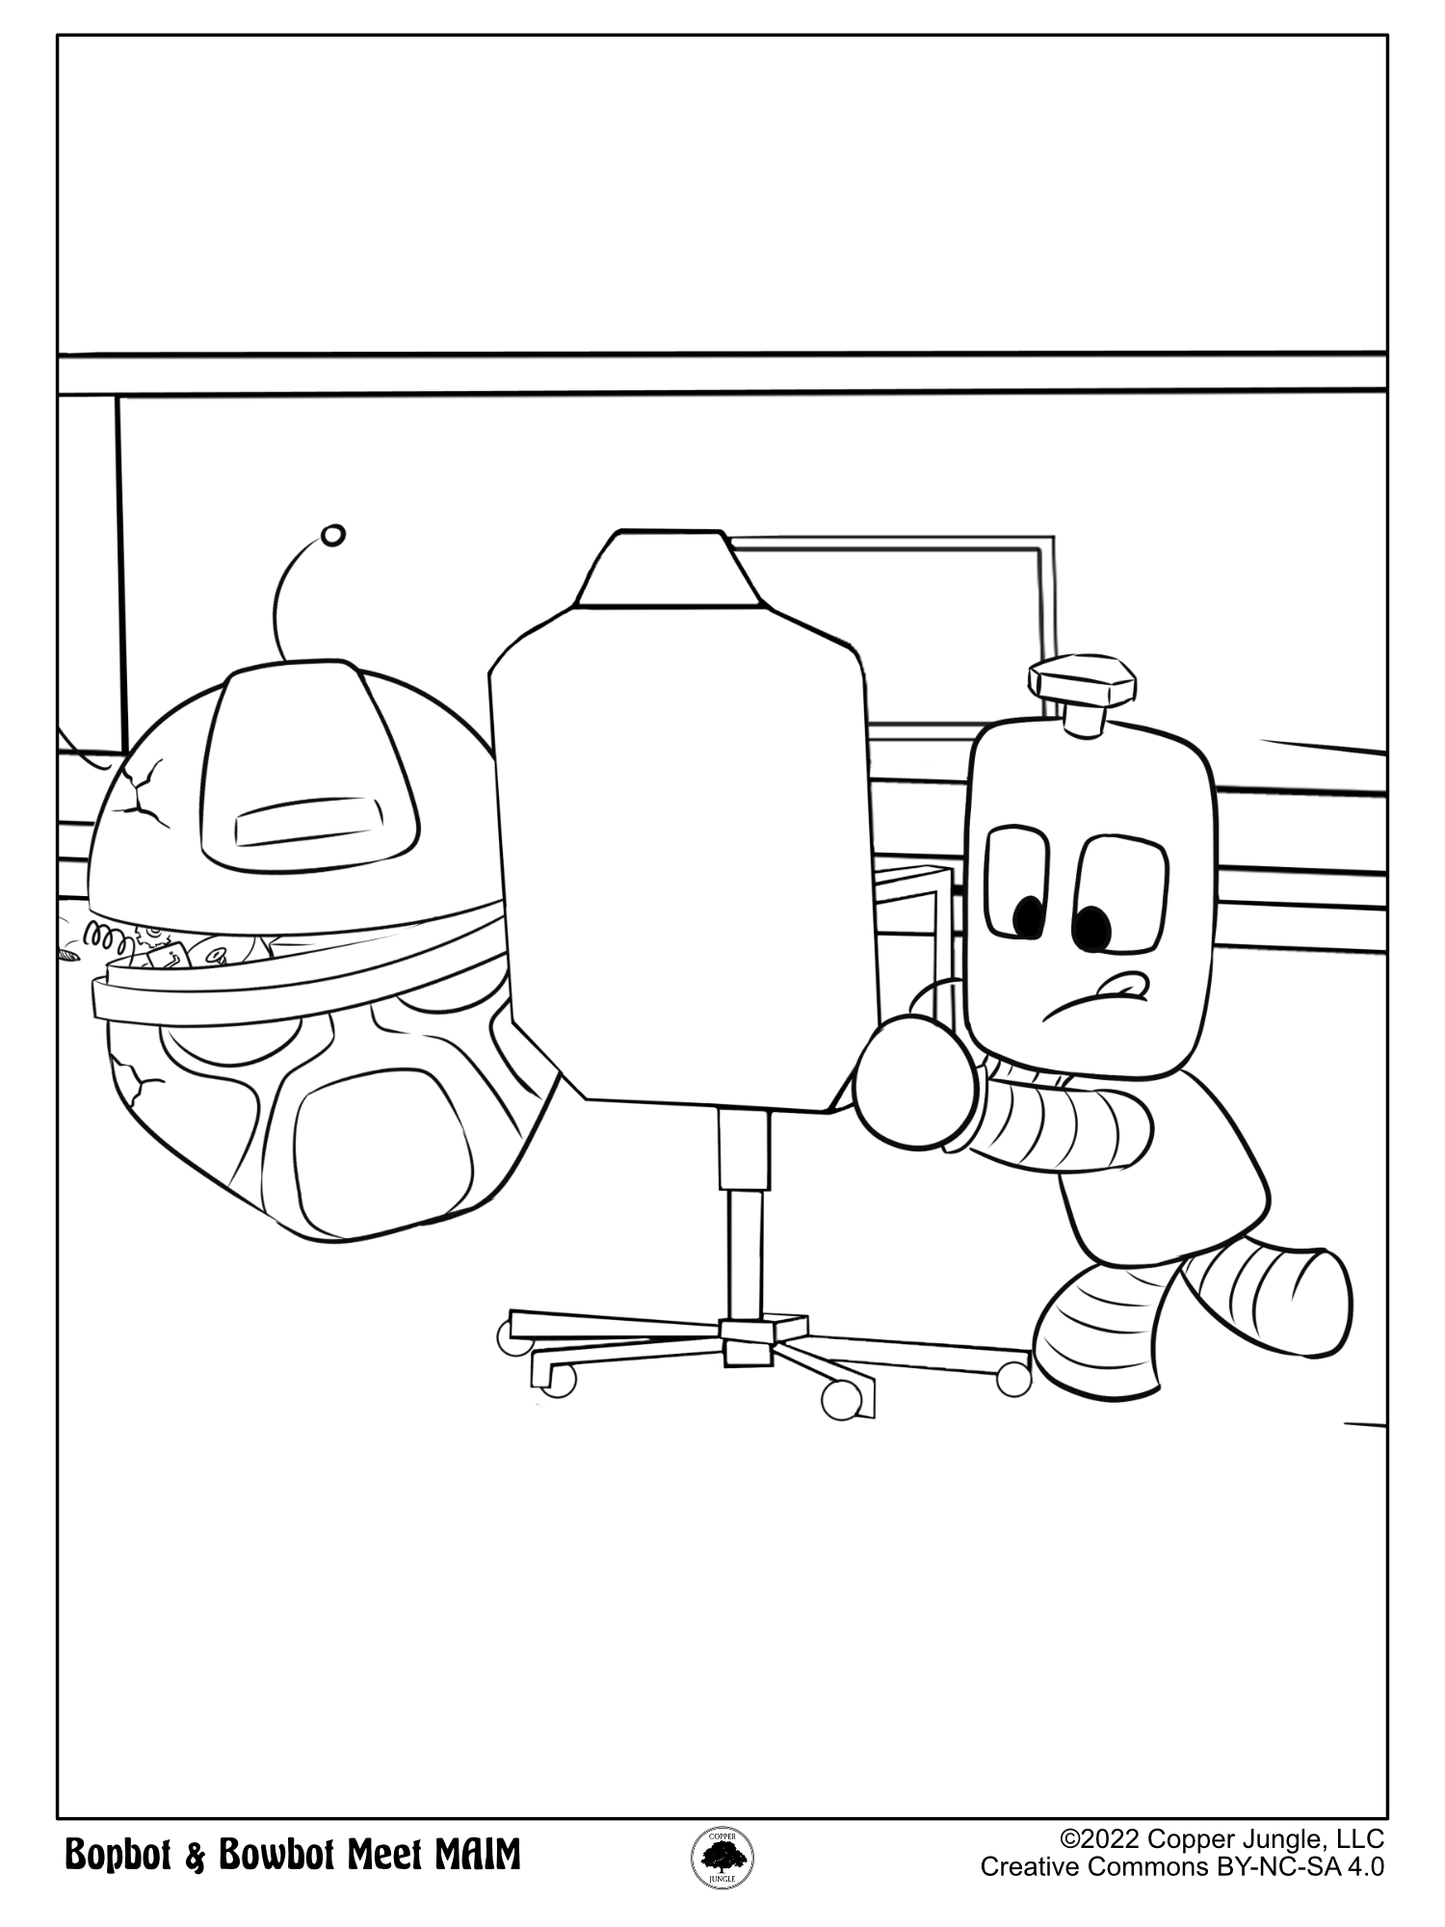 Bopbot & Bowbot - Fighting Robots Coloring Page